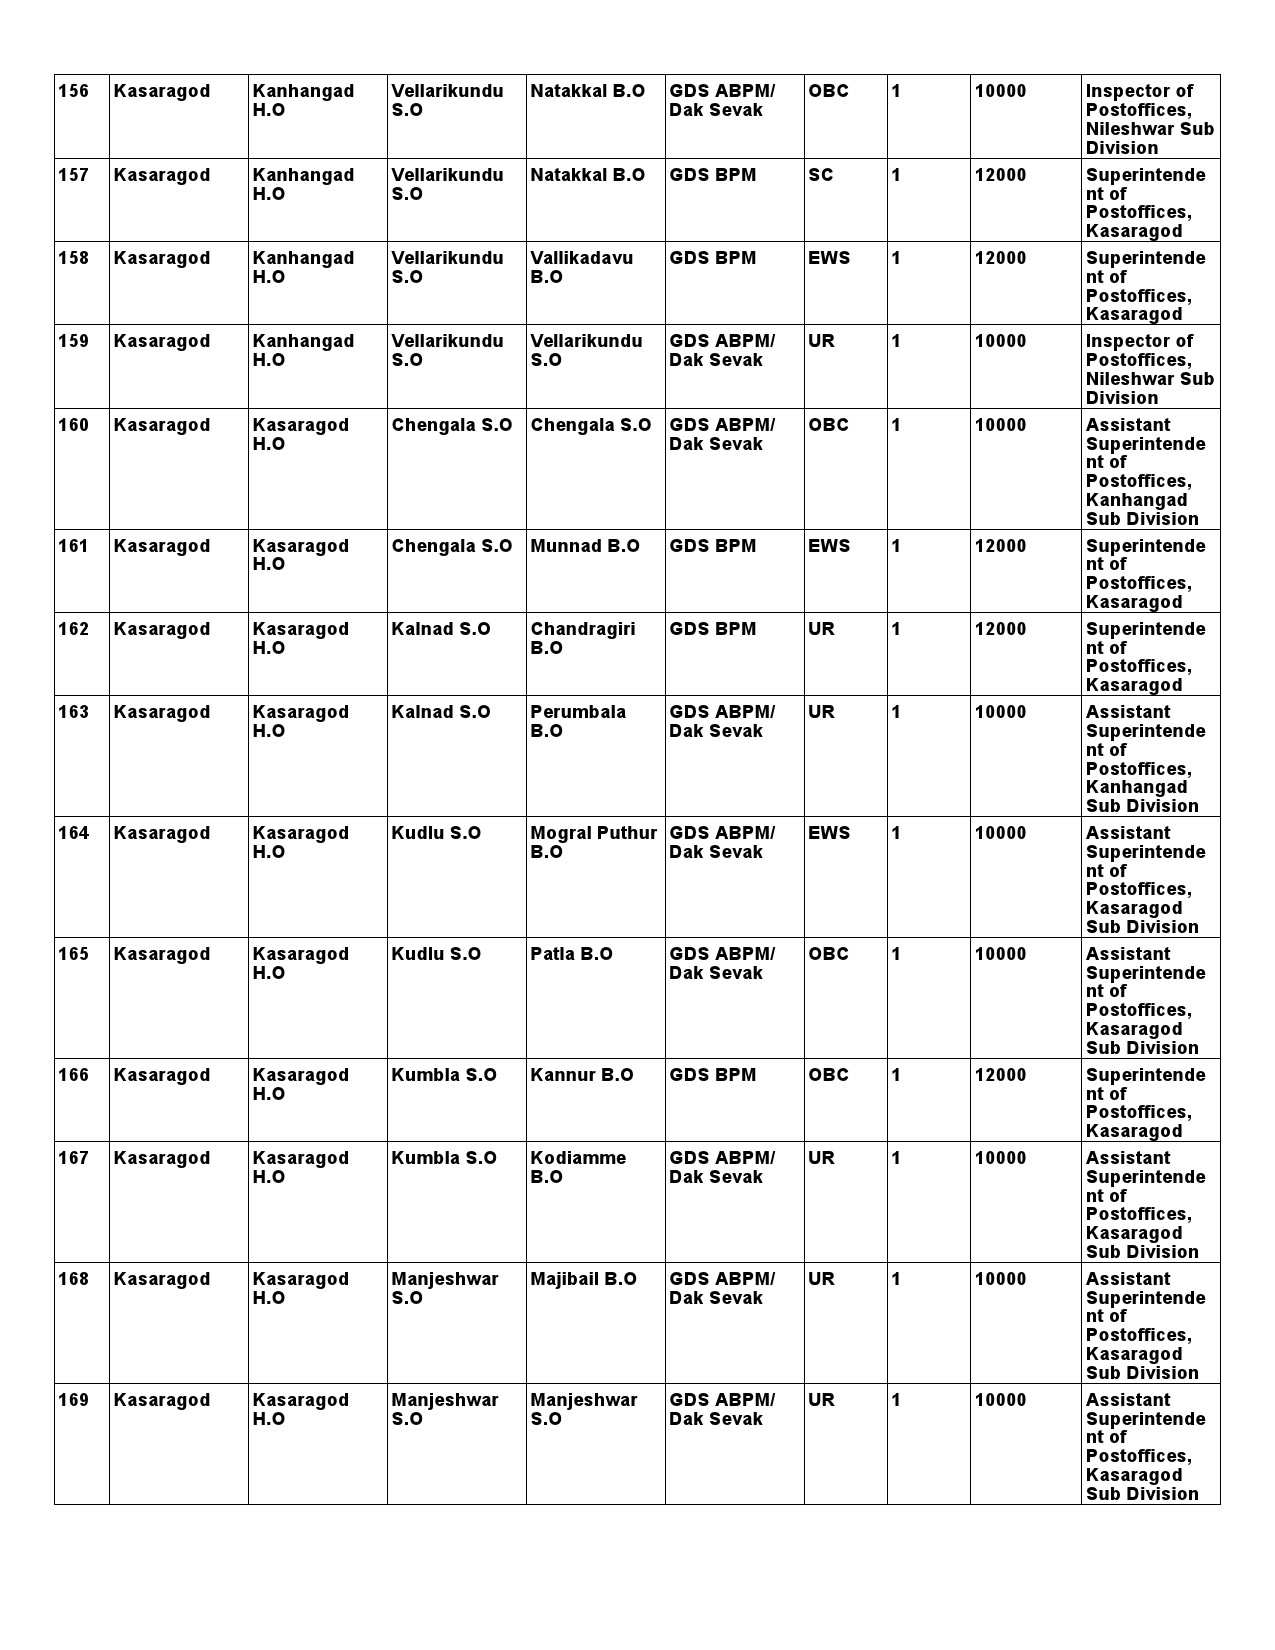 Kerala Postal Circle GDS Recruitment 2021 notification - Notification Image 27